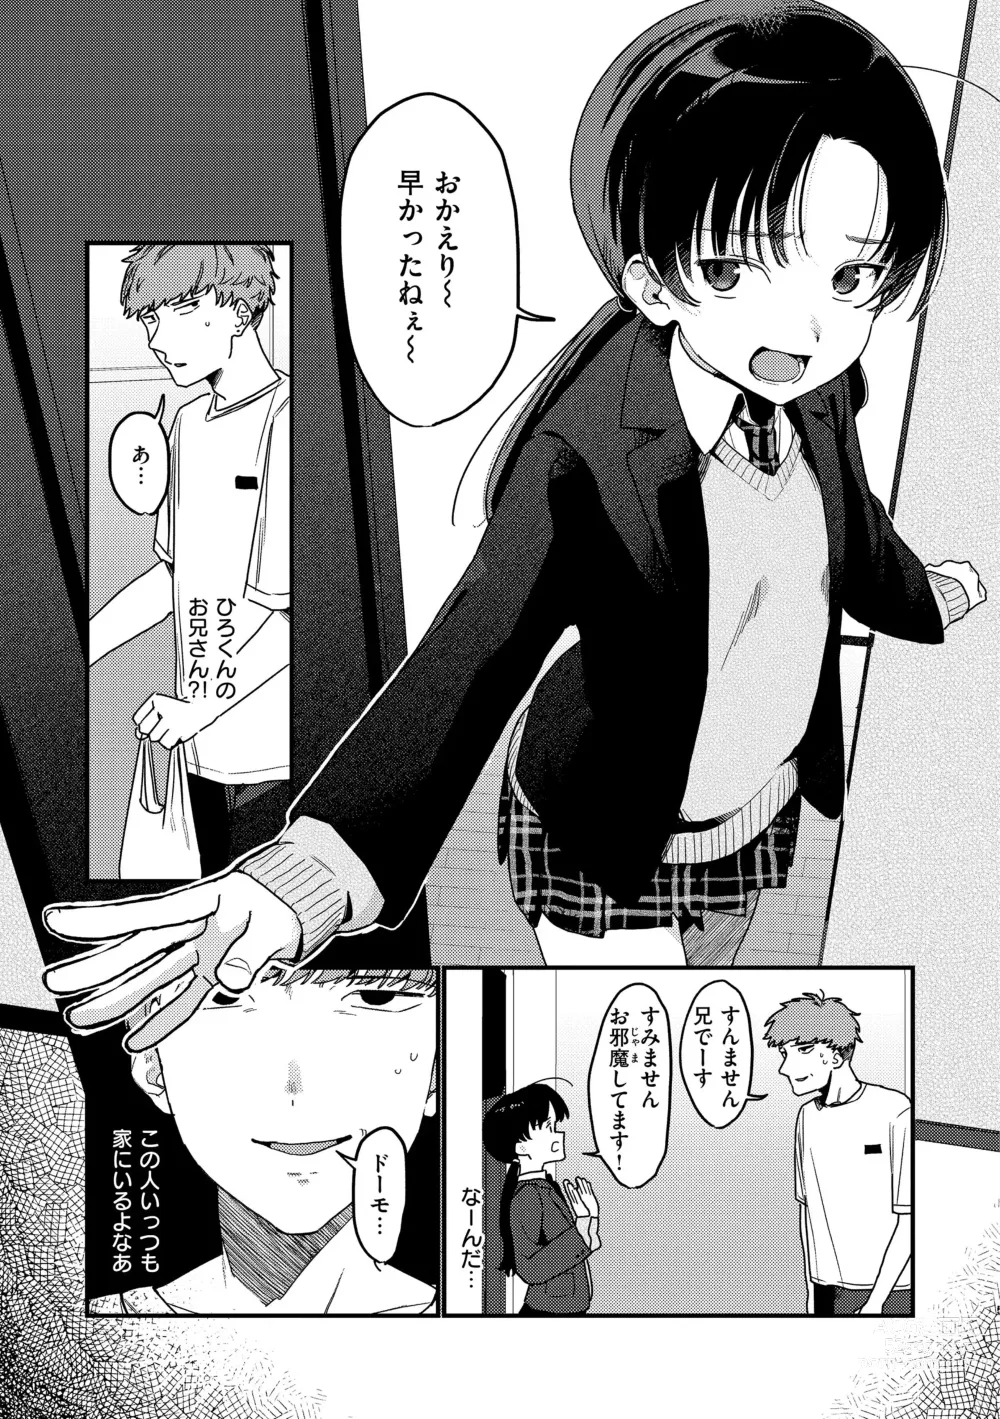 Page 9 of manga Wakarasete. - Show me reality.